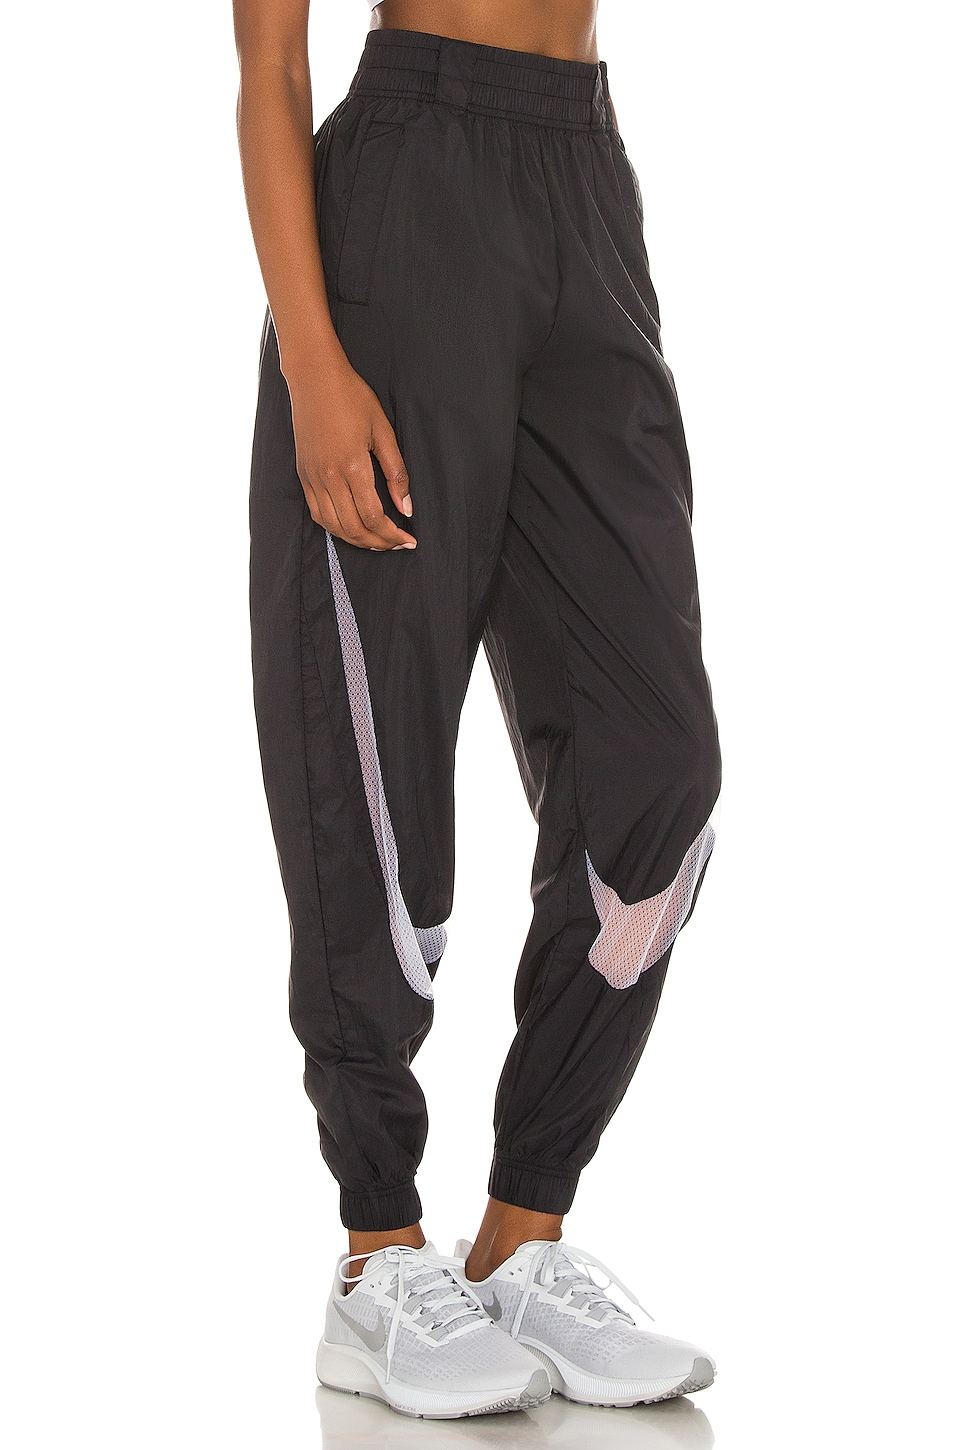 Nike NSW Woven Pant in Black & White | REVOLVE